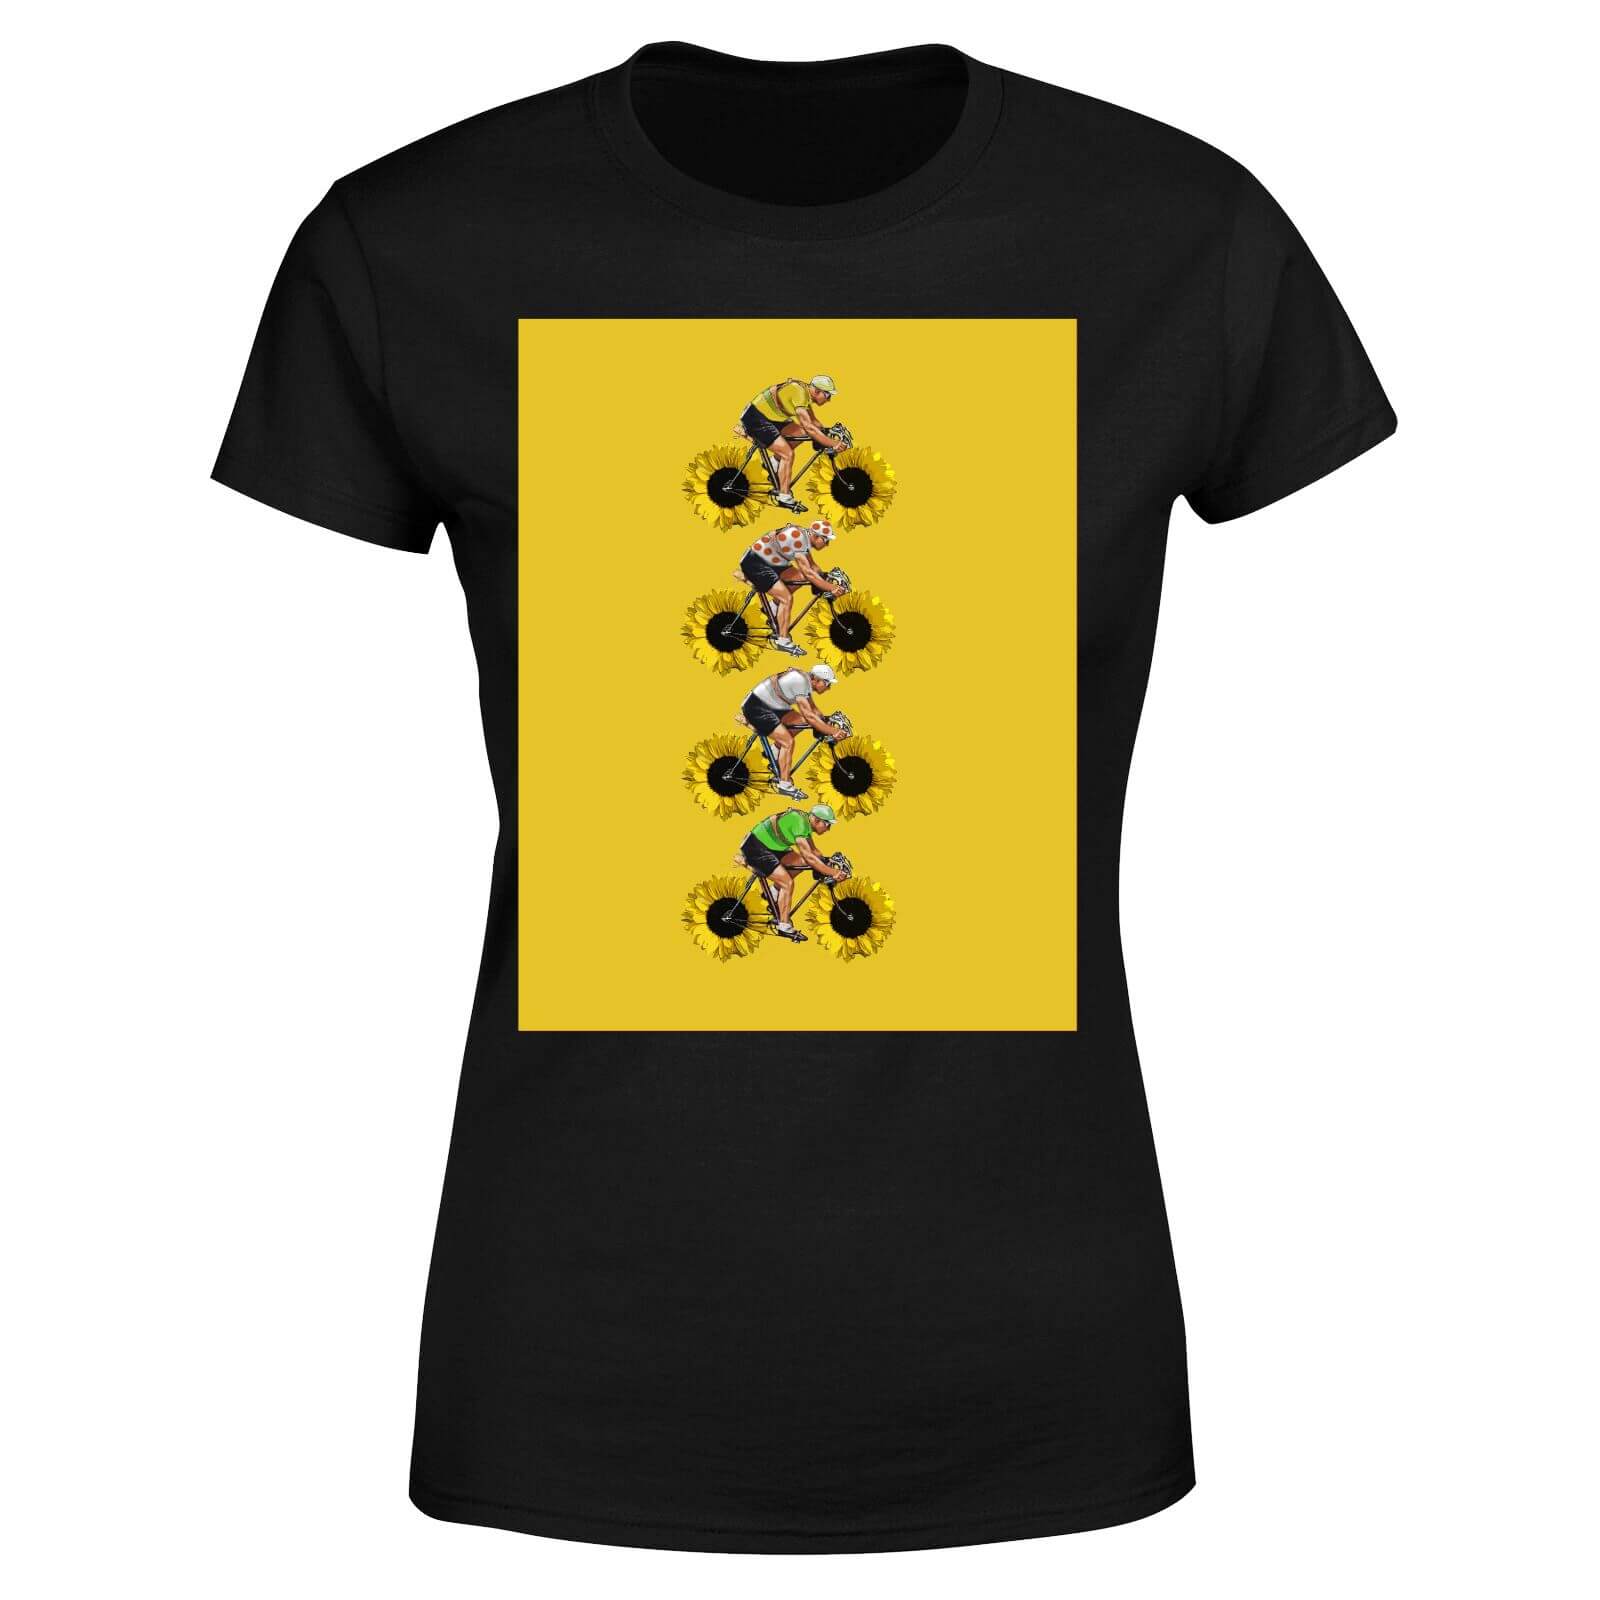 TDF Maillots Women's T-Shirt - Black - XL - Black